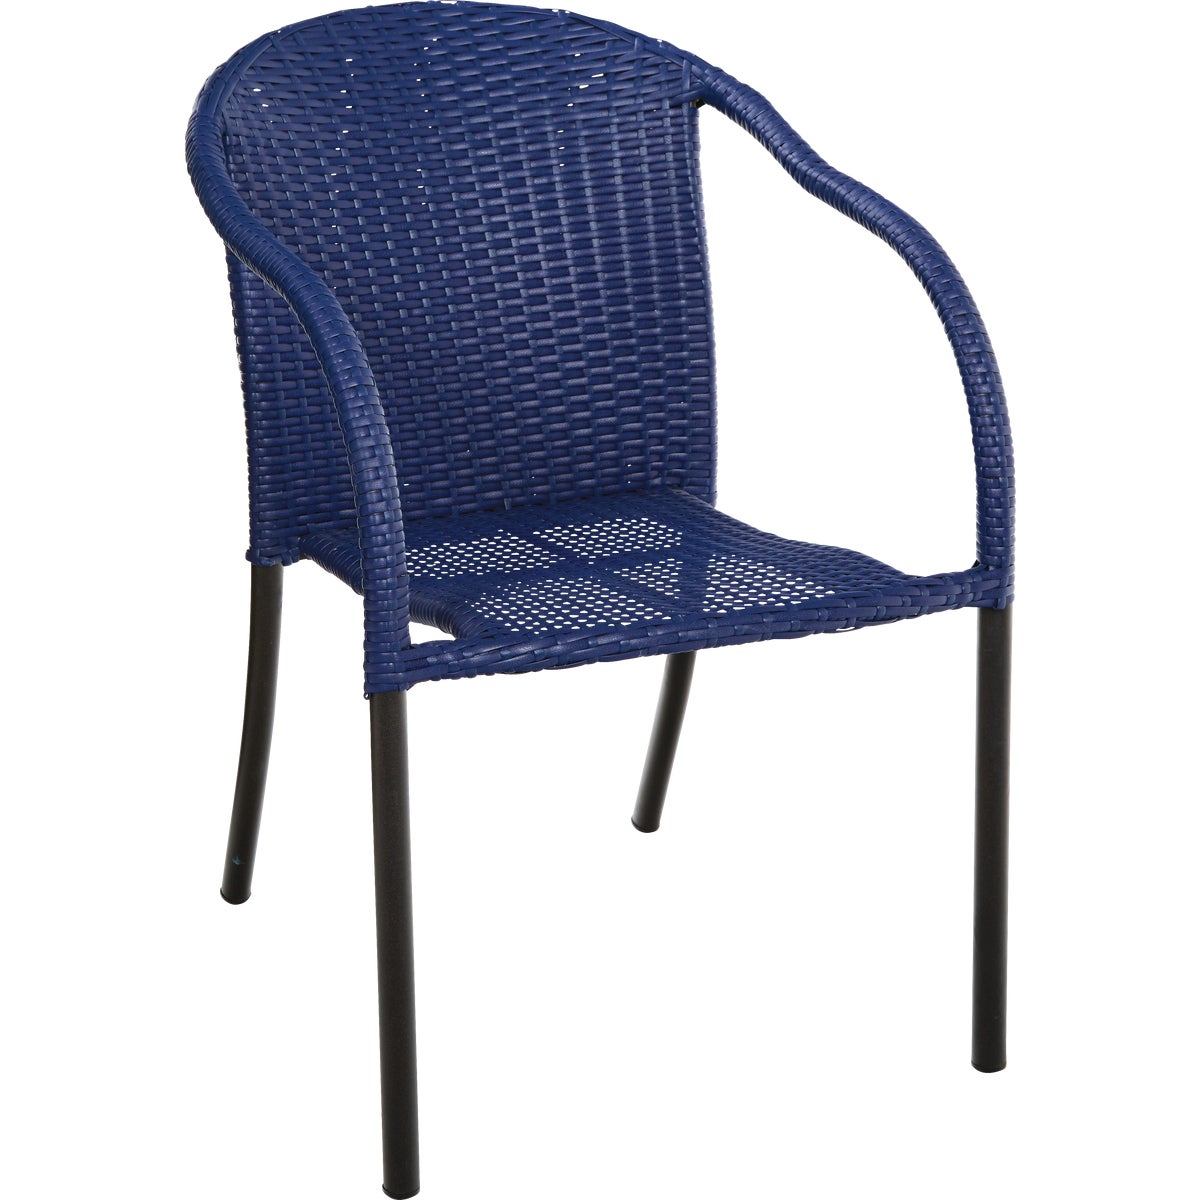 Coronado Casuals Blue Wicker Steel Frame Stackable Chair